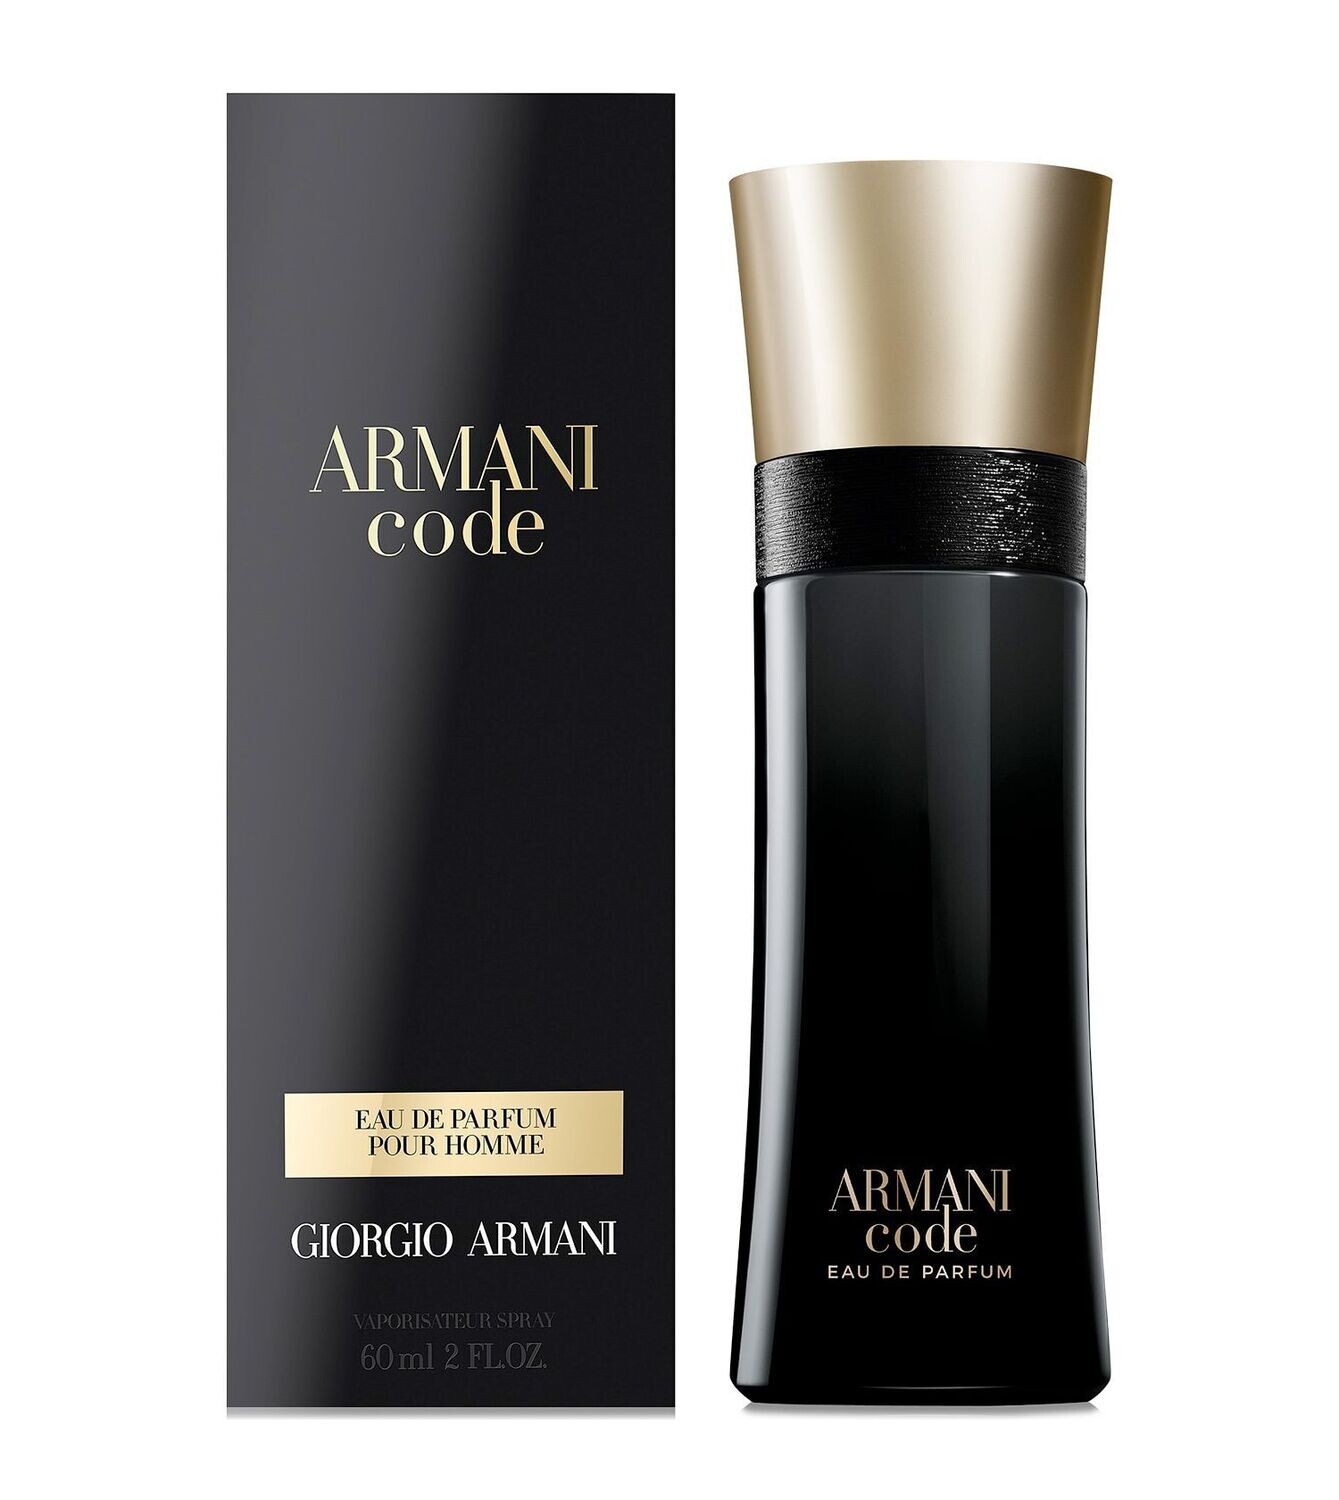 Armani Code Pour Homme - Giorgio Armani